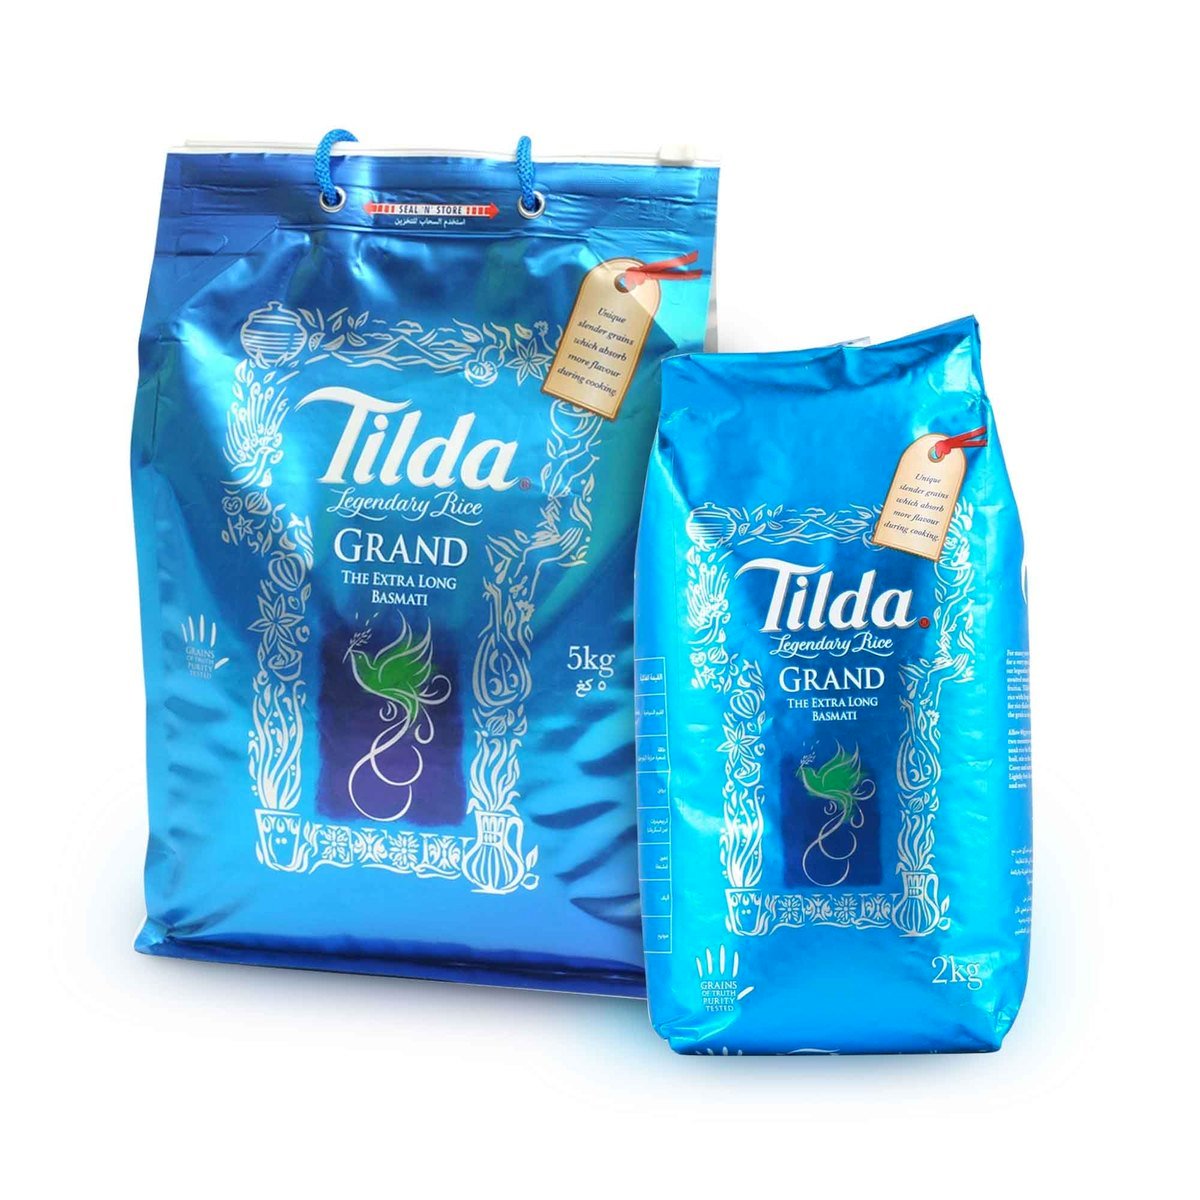 Tilda Grand Extra Long Basmati Rice 5kg + 2kg